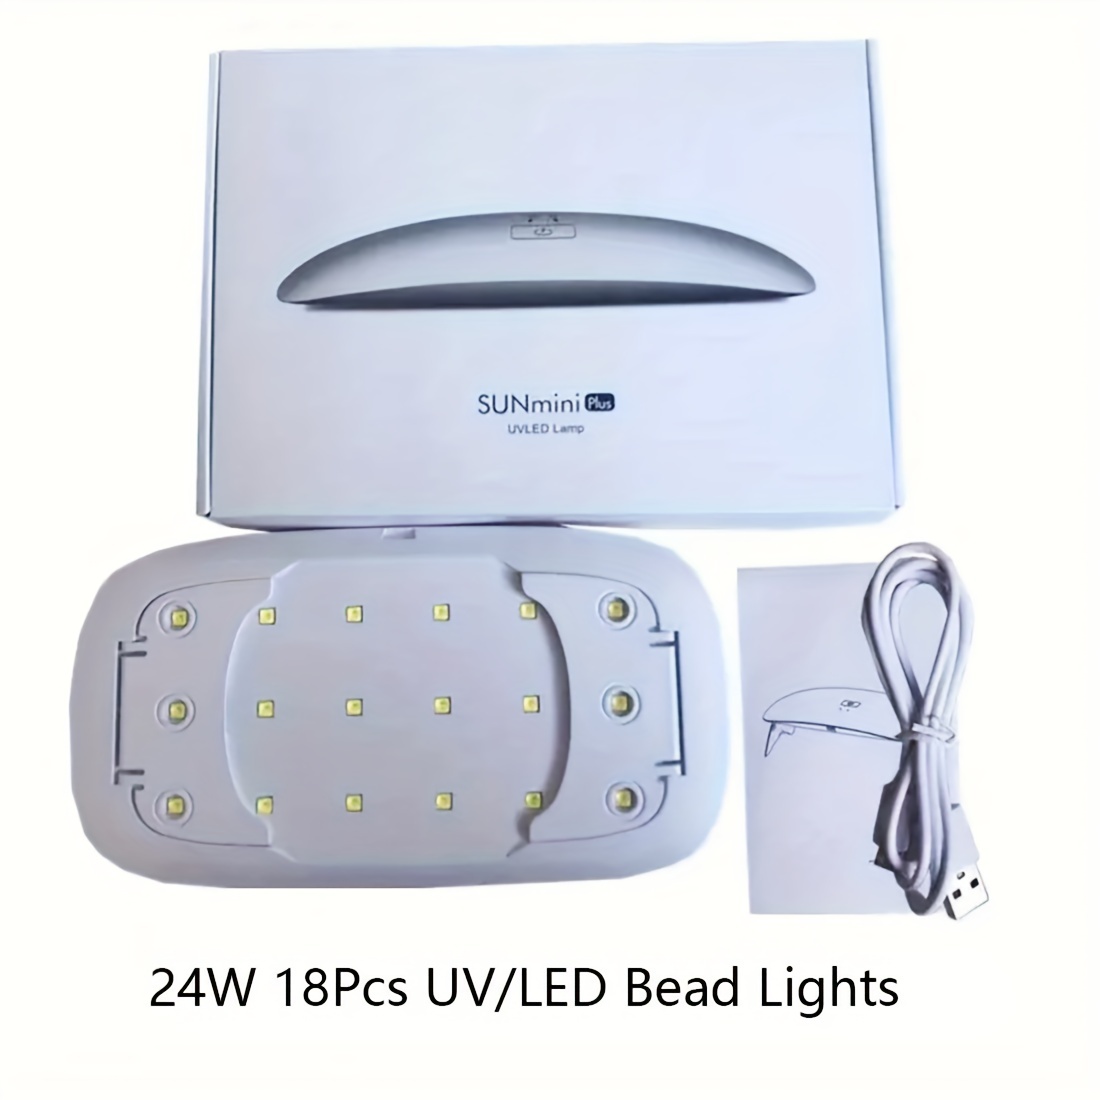 I0DO UV Lamp for Resin,UV Light for Loca Glue,Uv Resin Light for Jewelry,Led Cure Light,UV Curing Machine Light Box